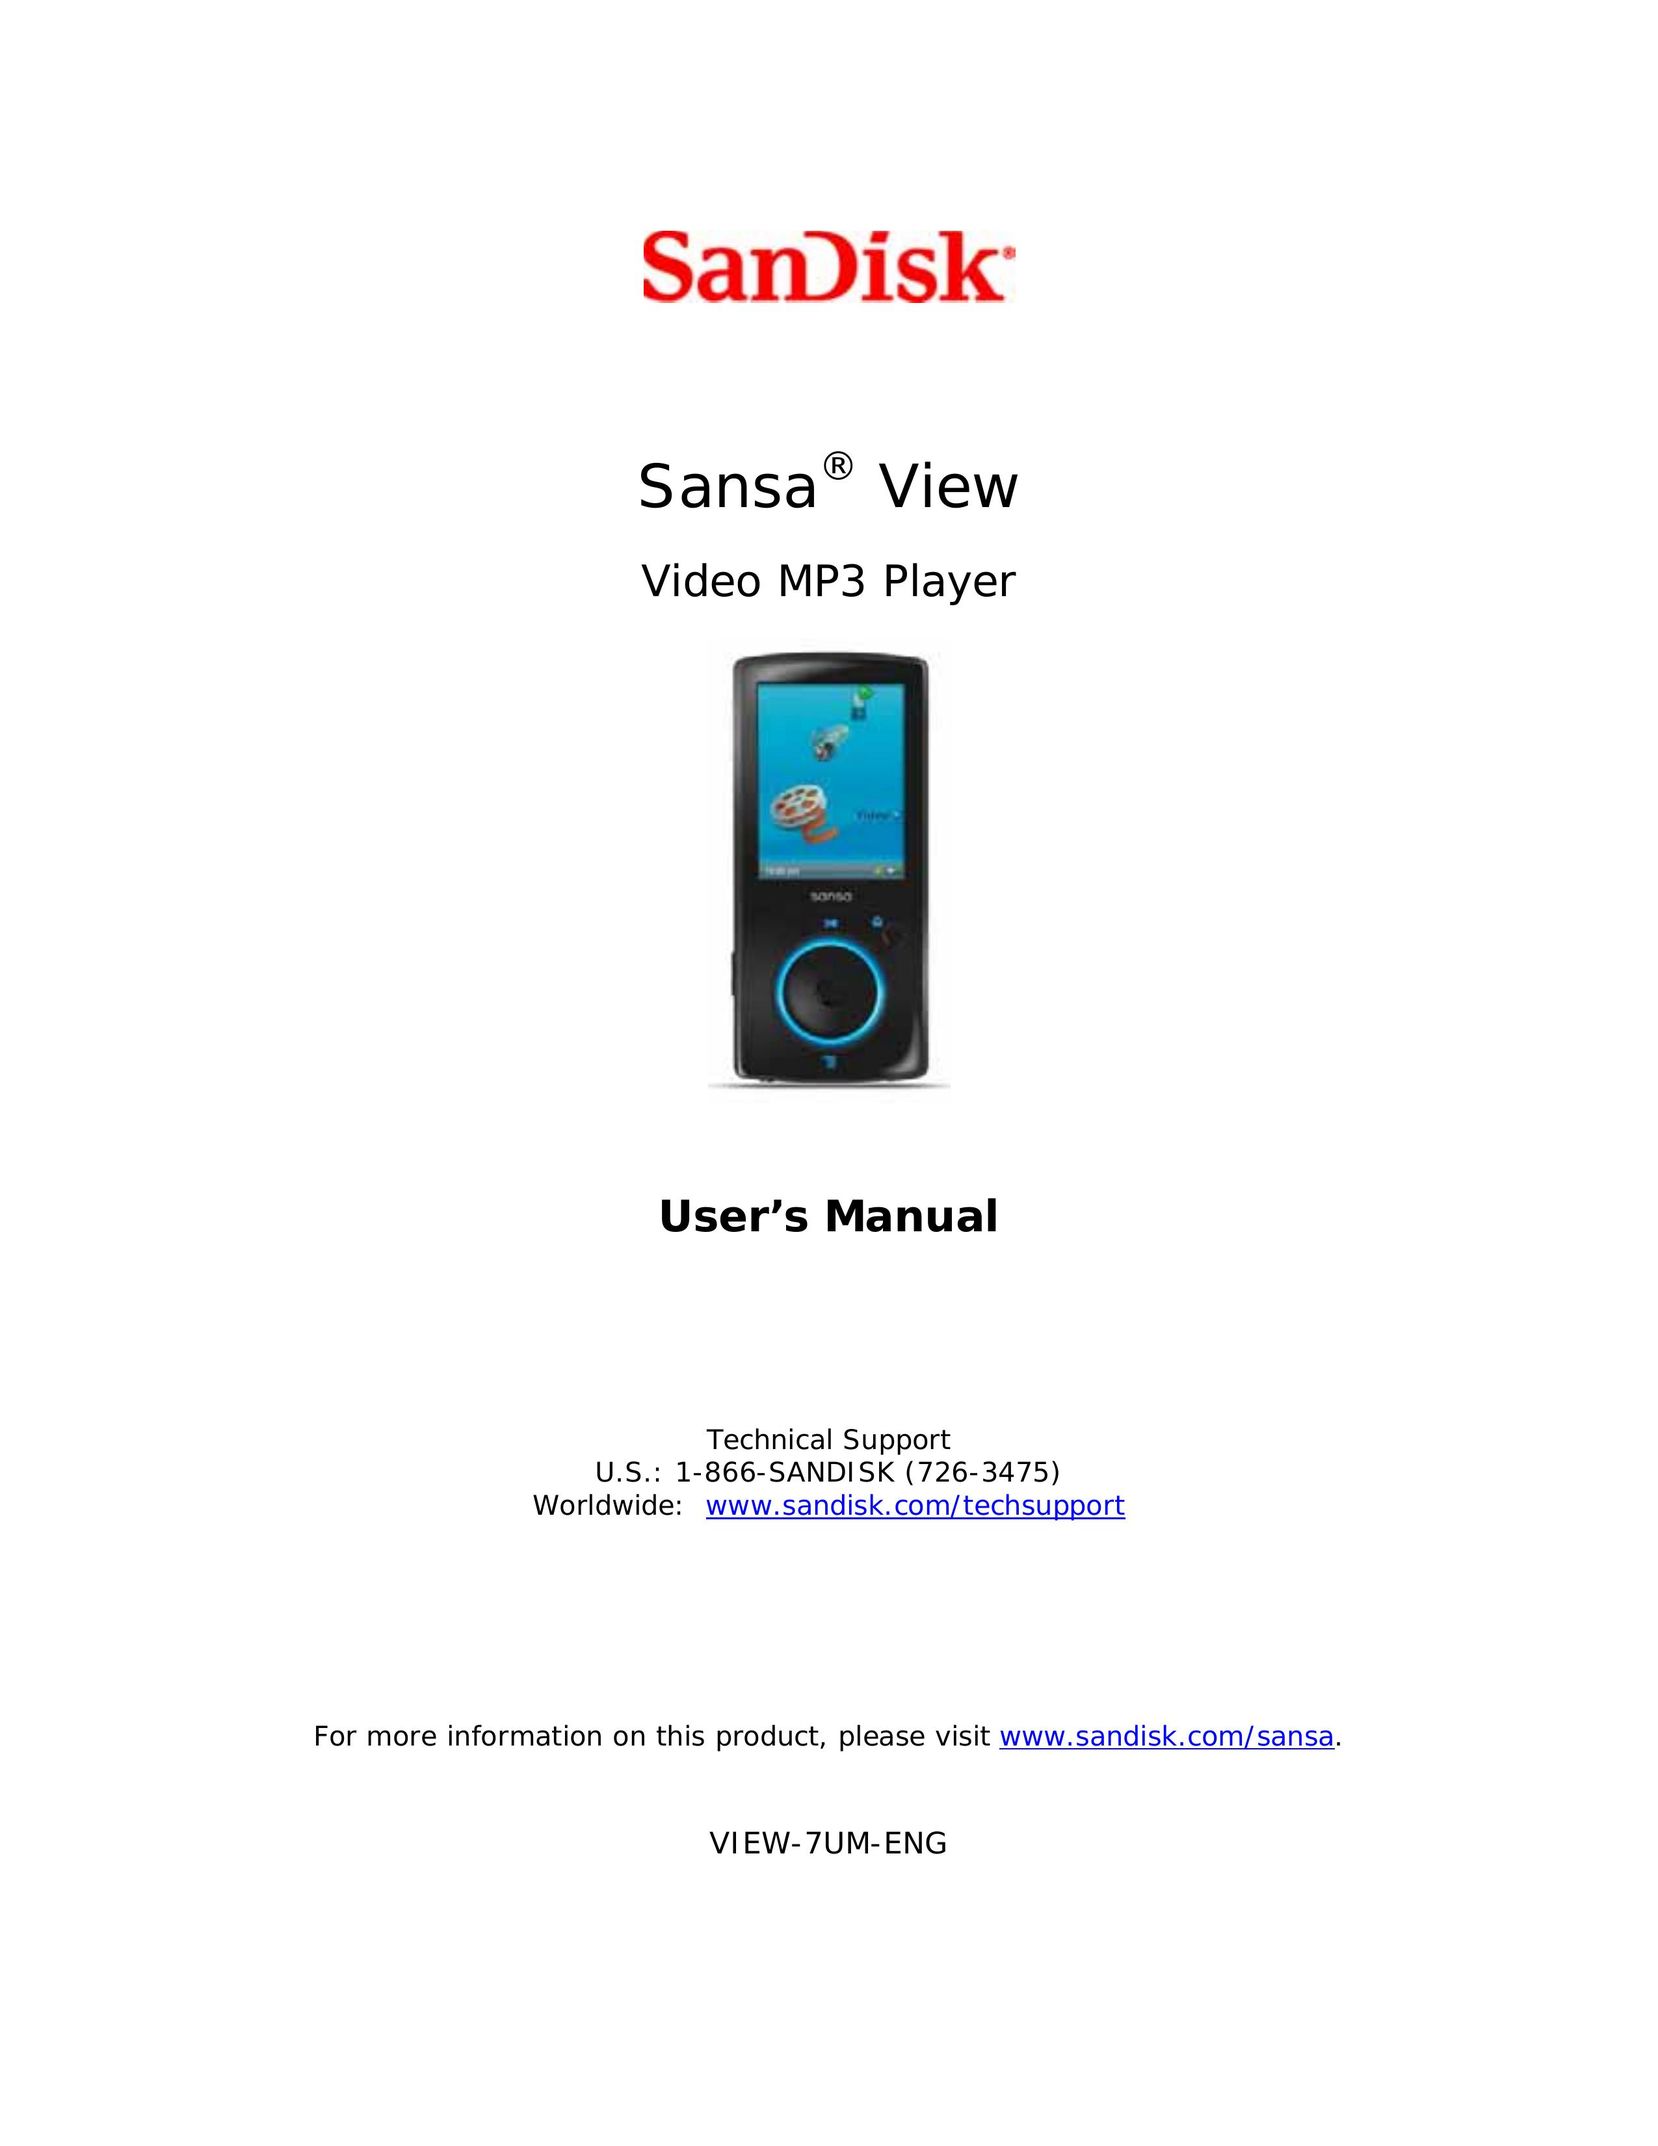 SanDisk VIEW-7UM-ENG MP3 Player User Manual